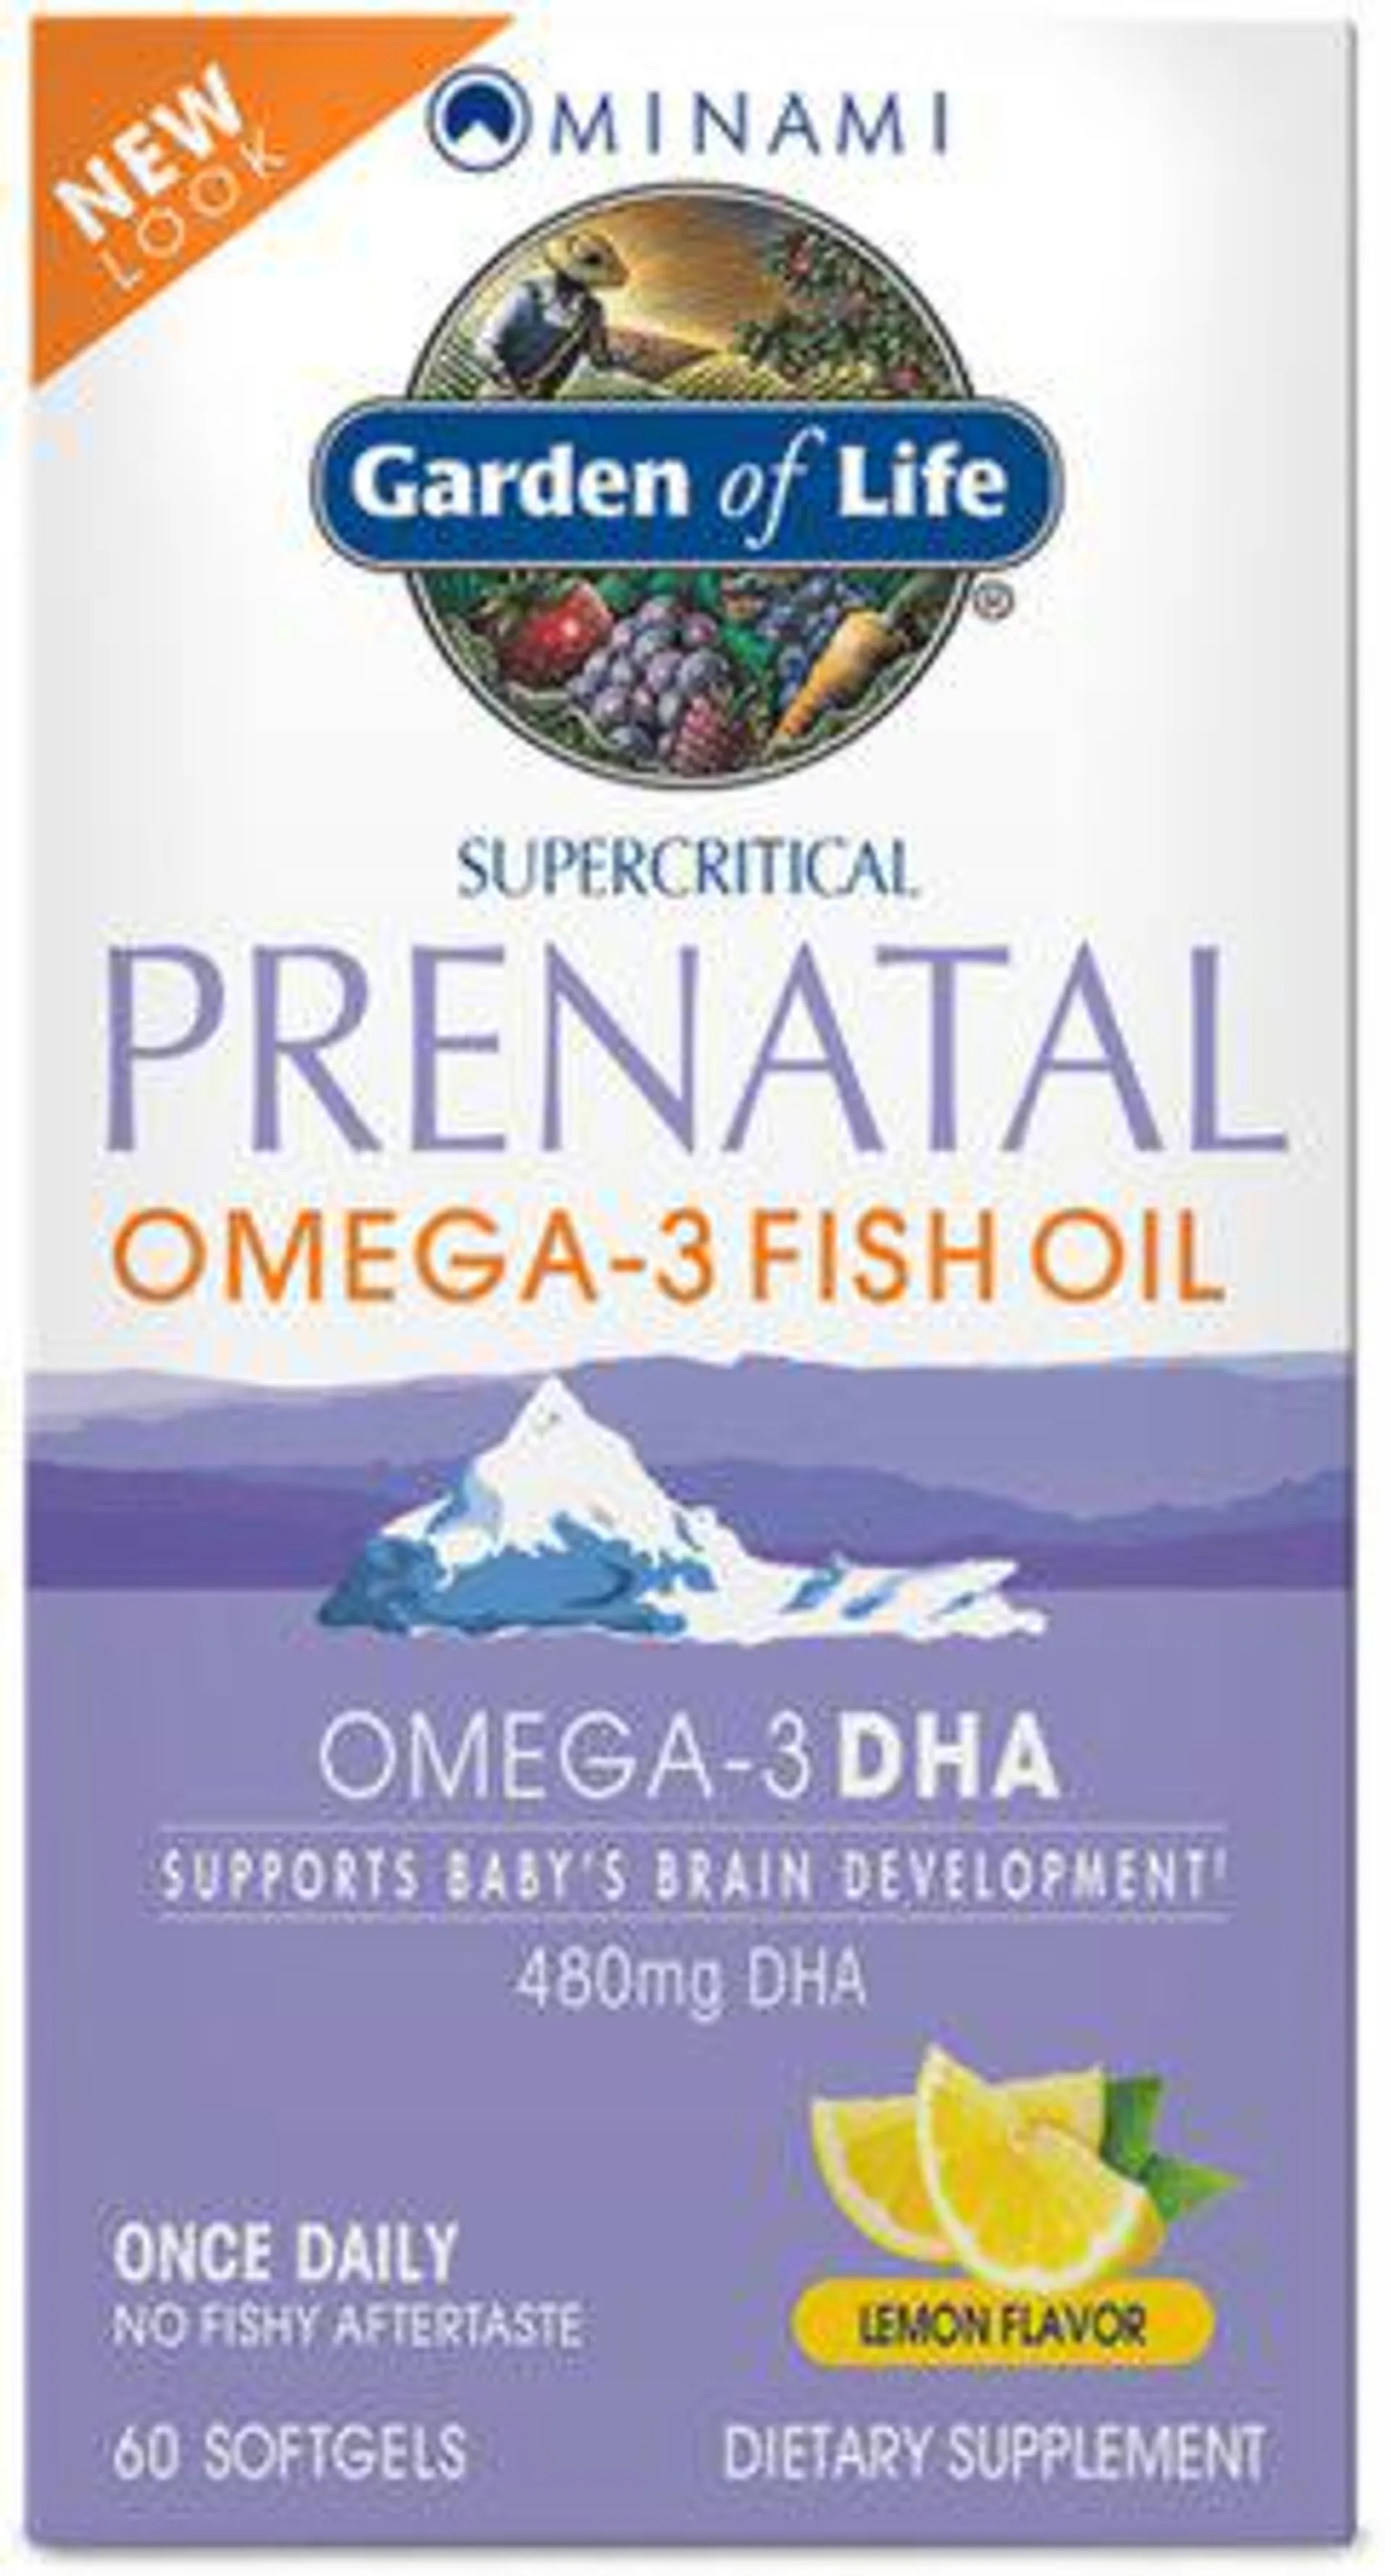 Minami Nutrition Omega 3 Prenatal